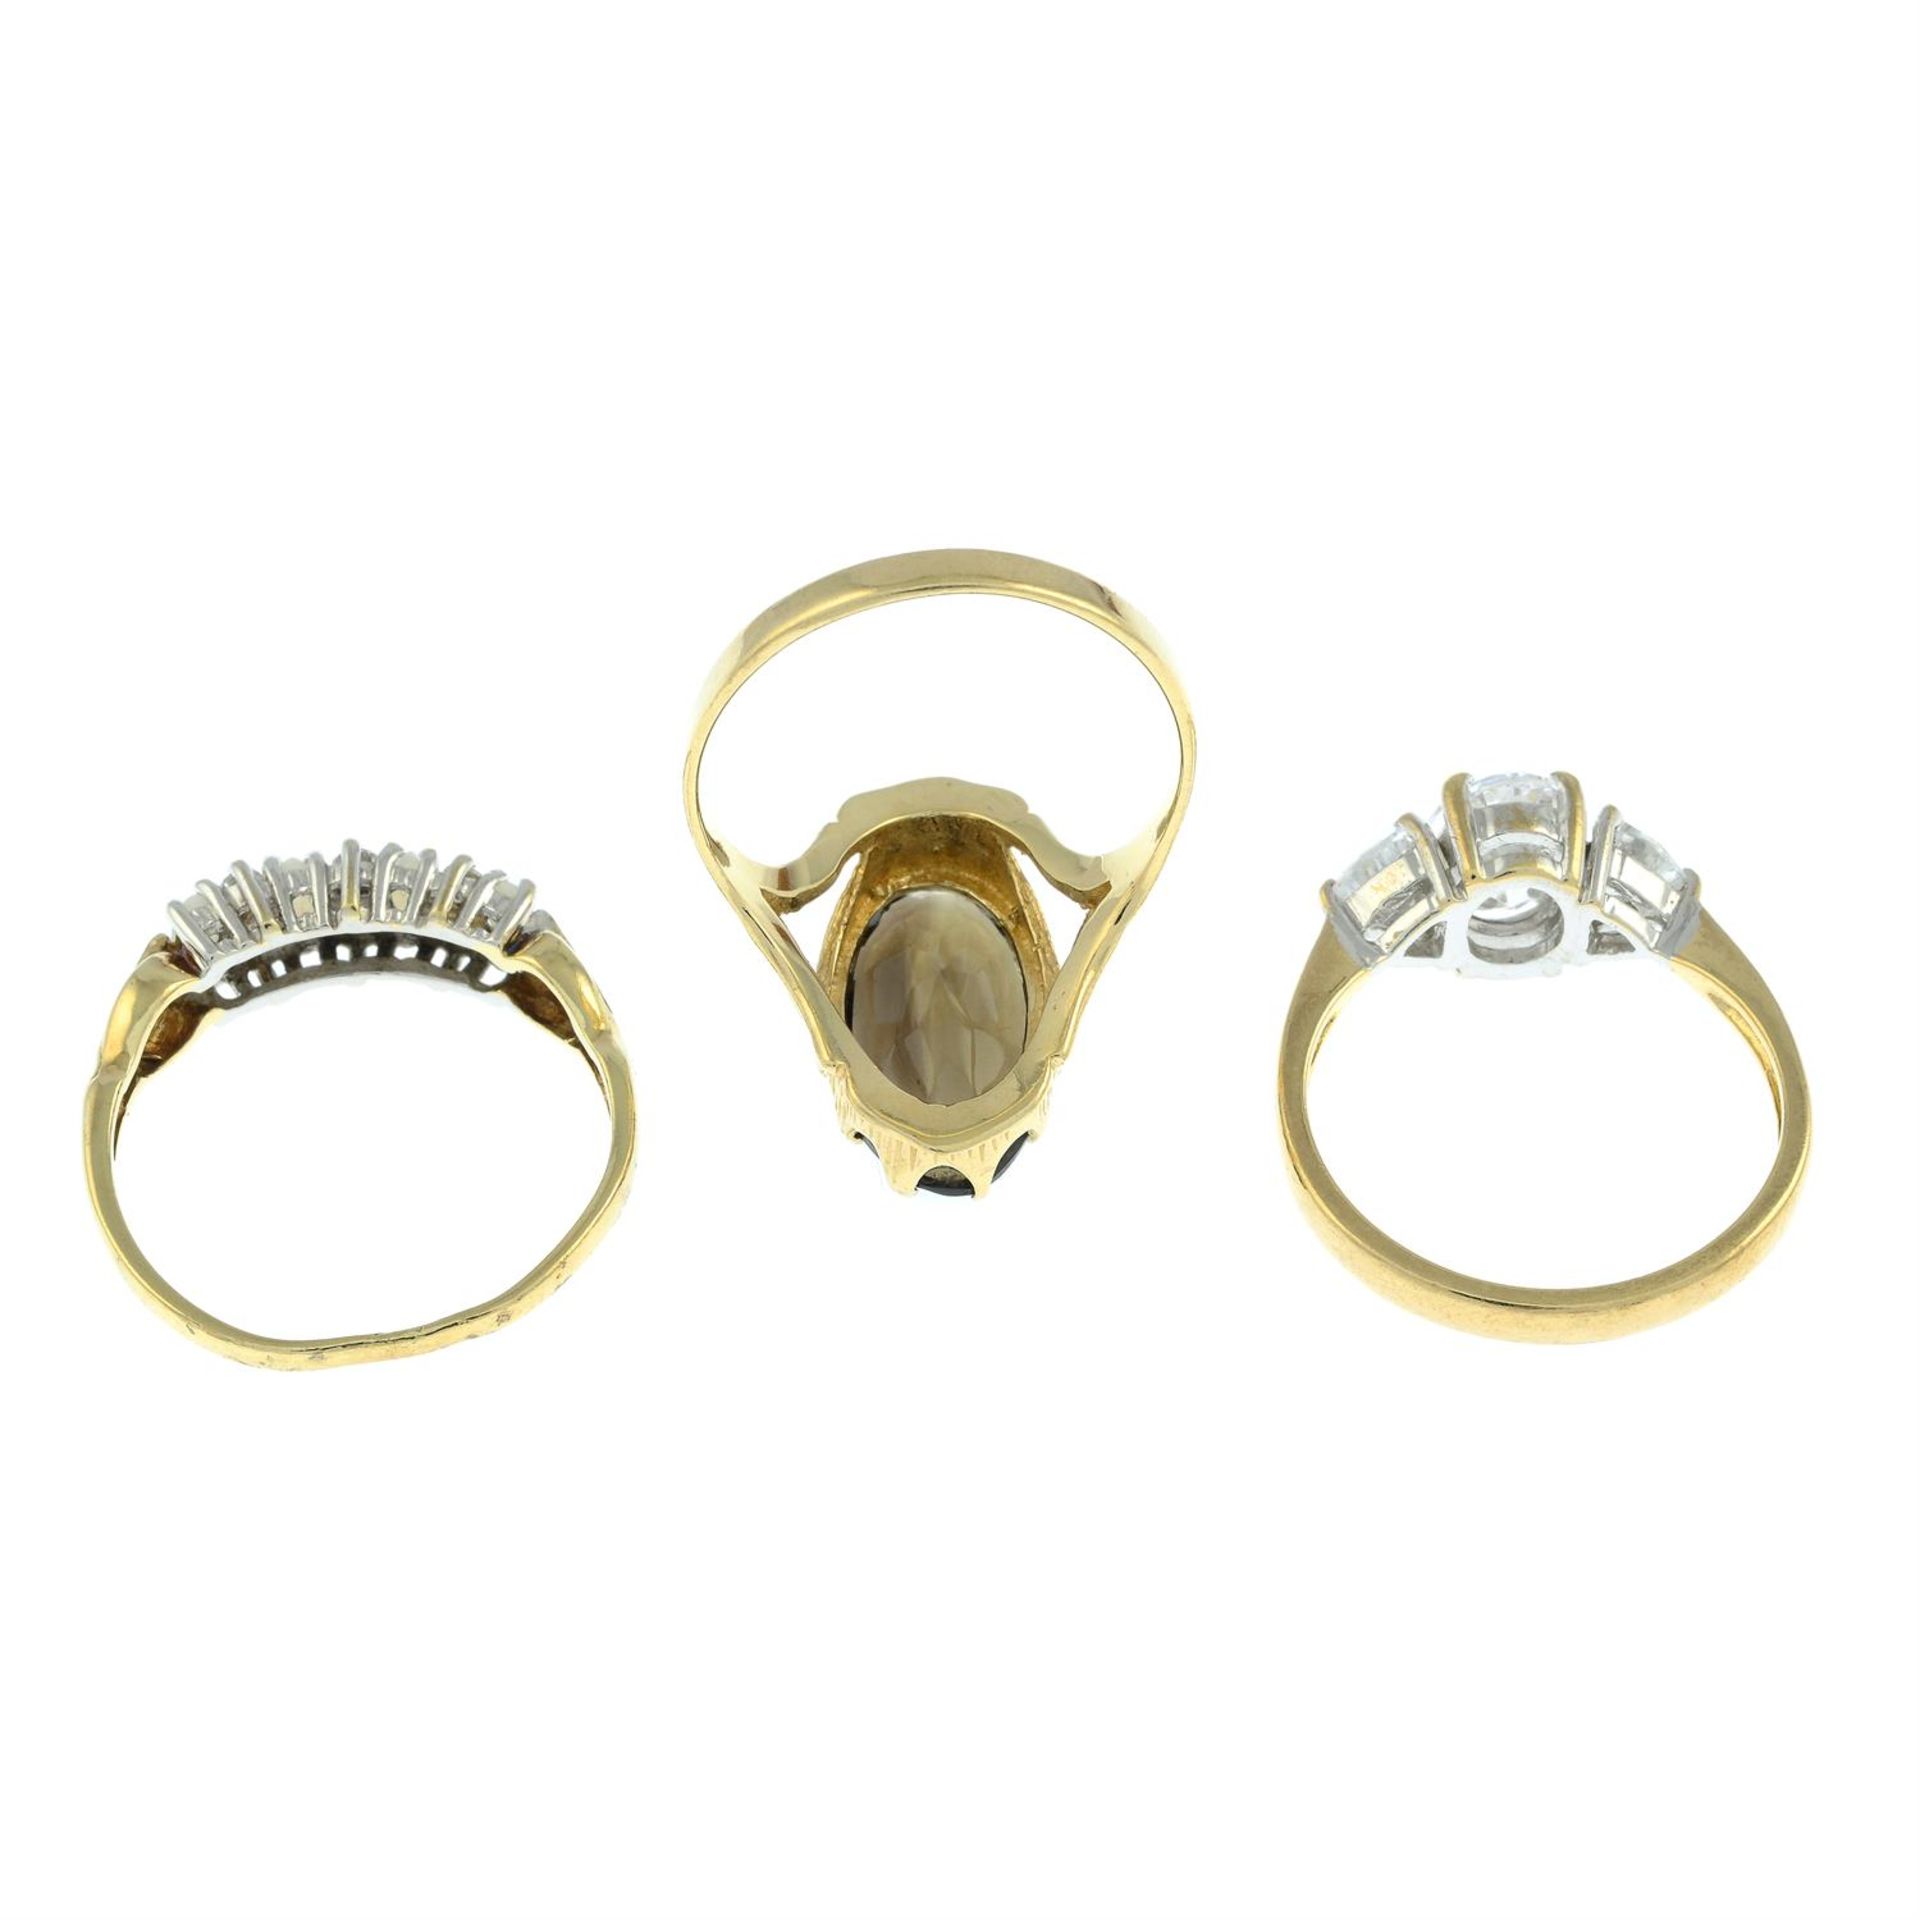 Three 9ct gold gem-set rings. - Image 2 of 2